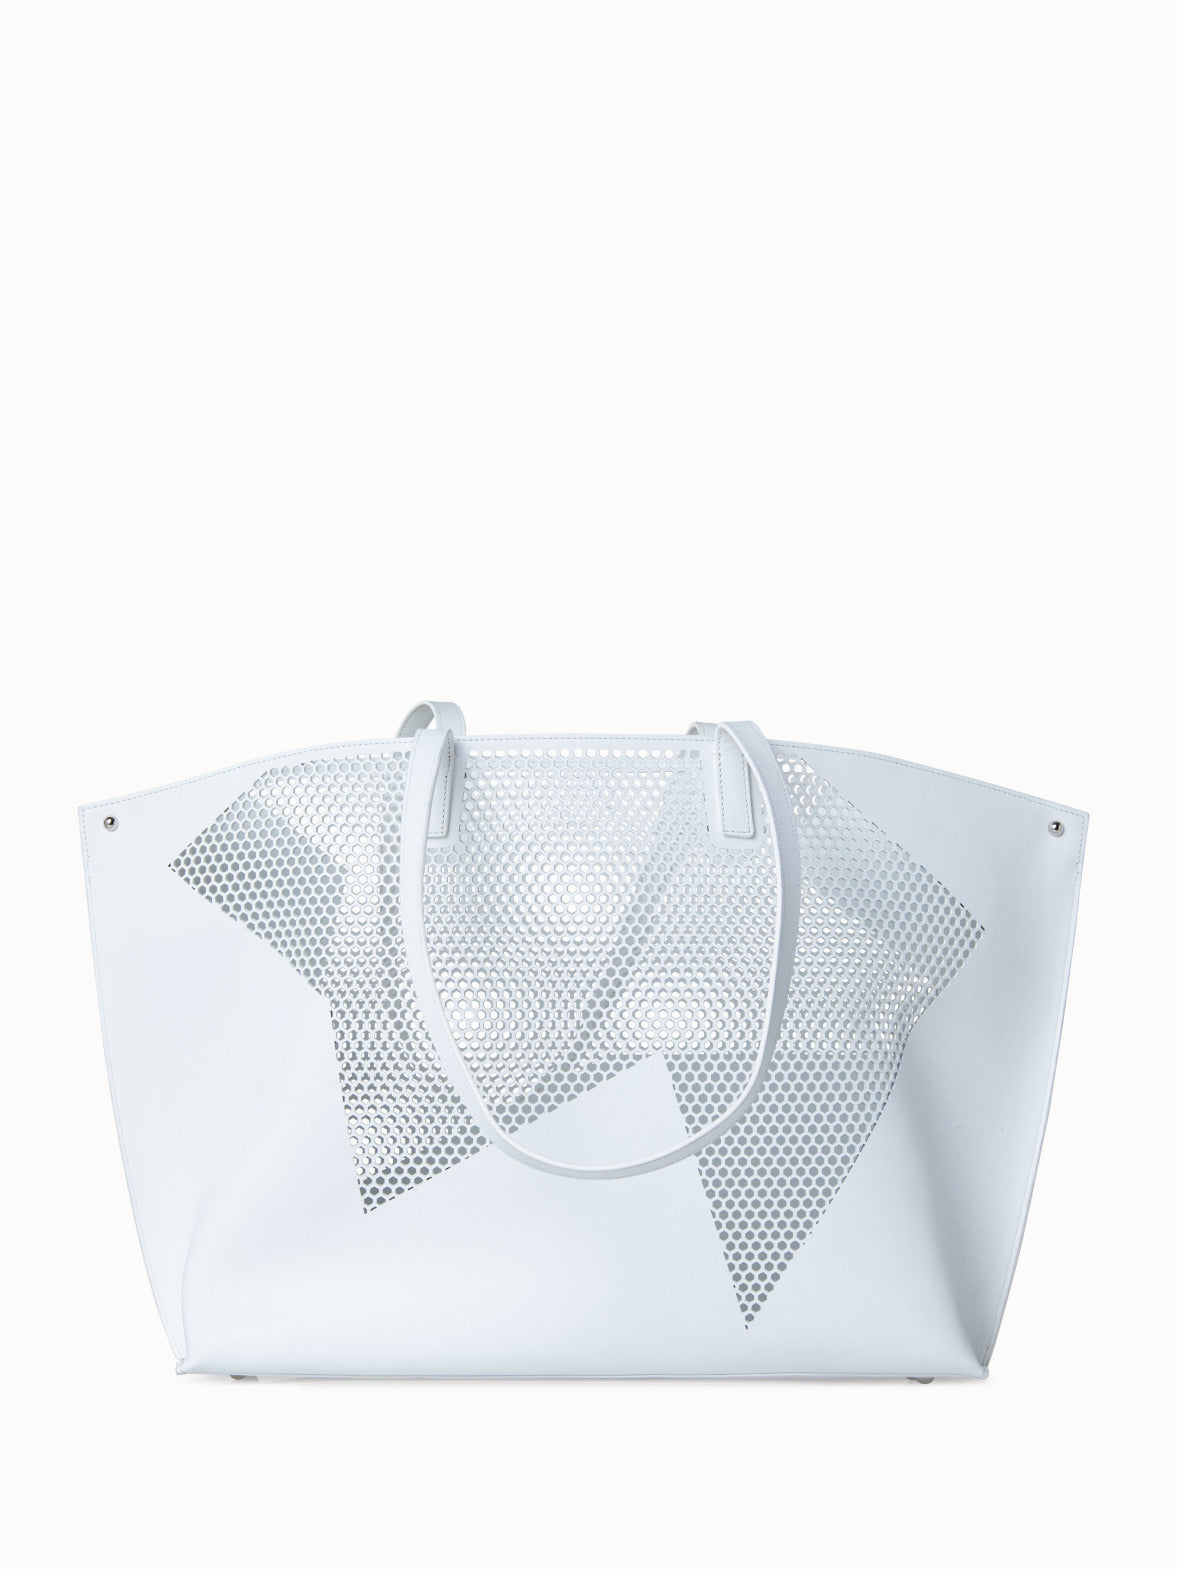 Oriflame Handbags For Ladies Spain, SAVE 44% - online-pmo.com